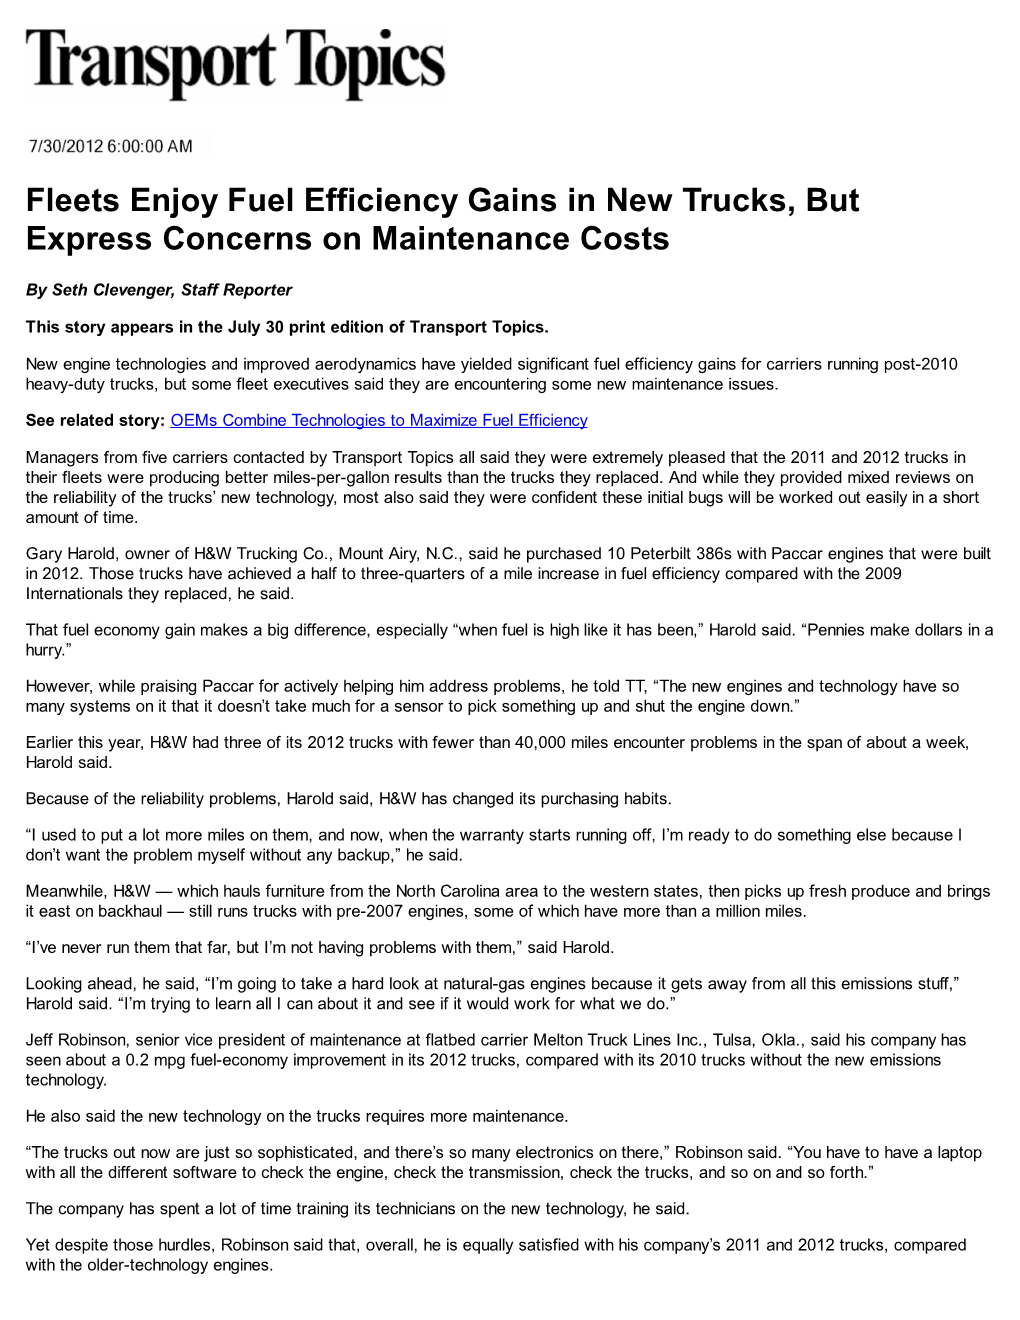 Fleets Enjoy Fuel Efficiency Gains in New Trucks, But